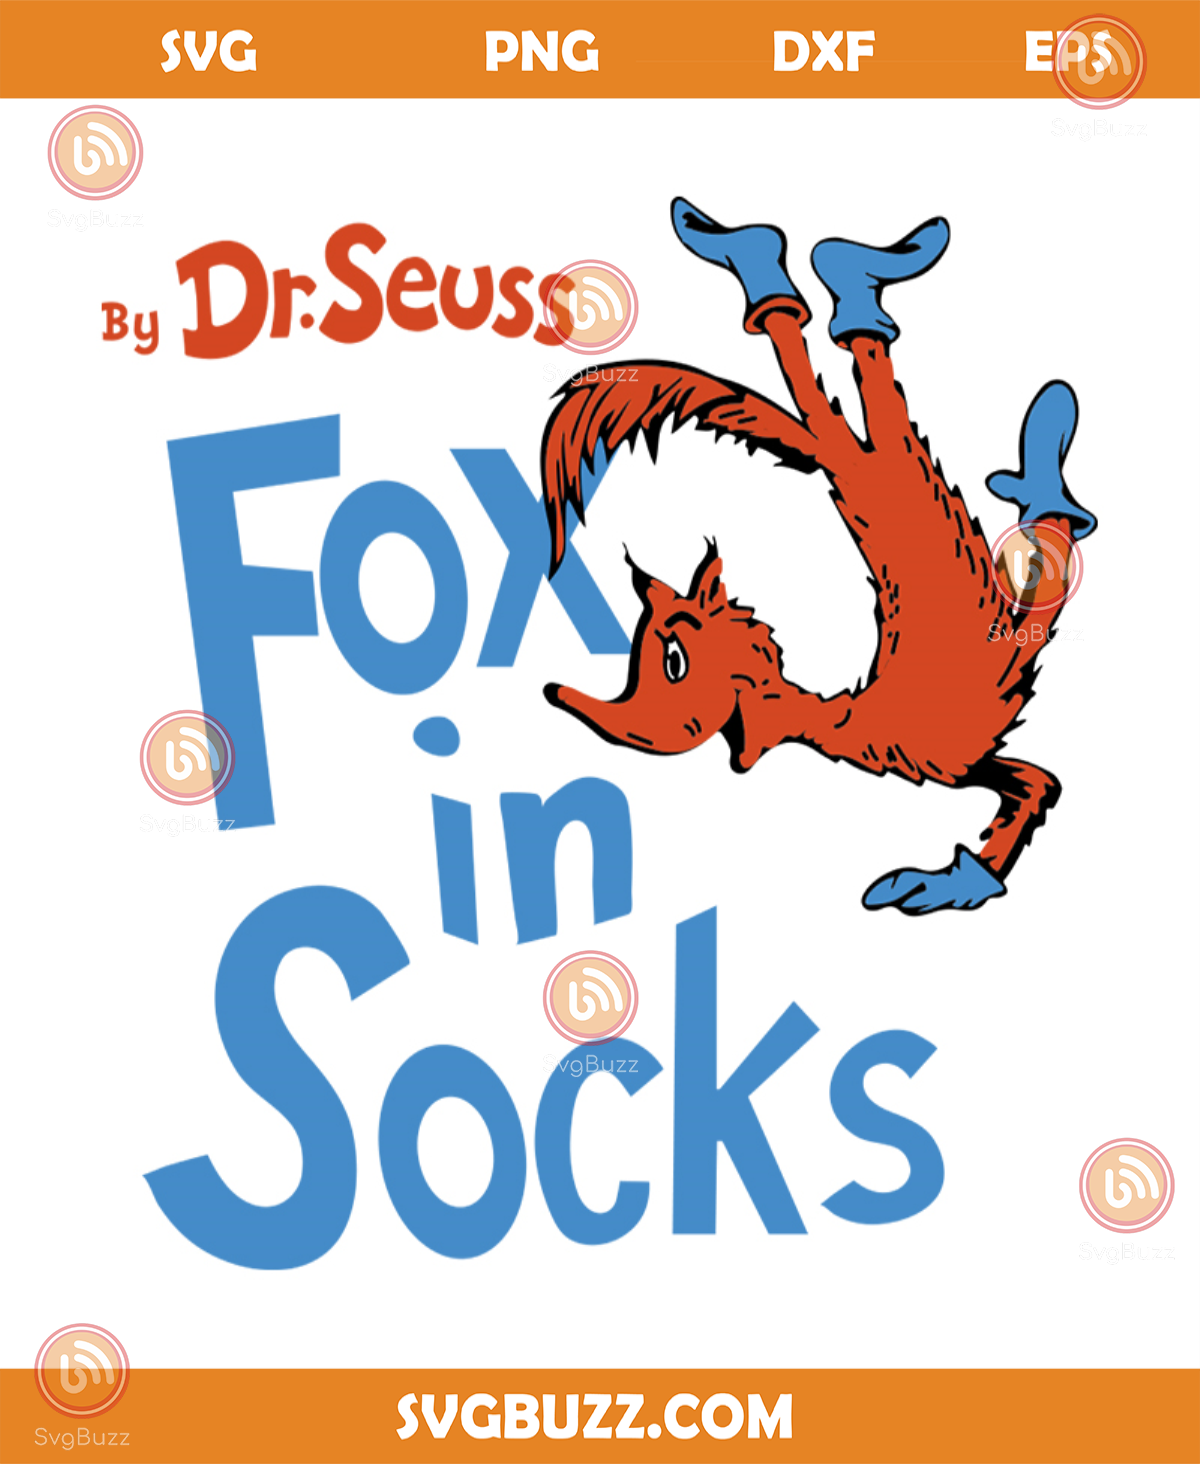 Fox in socks svg, trending svg, dr seuss svg, fox svg, socks svg, dr